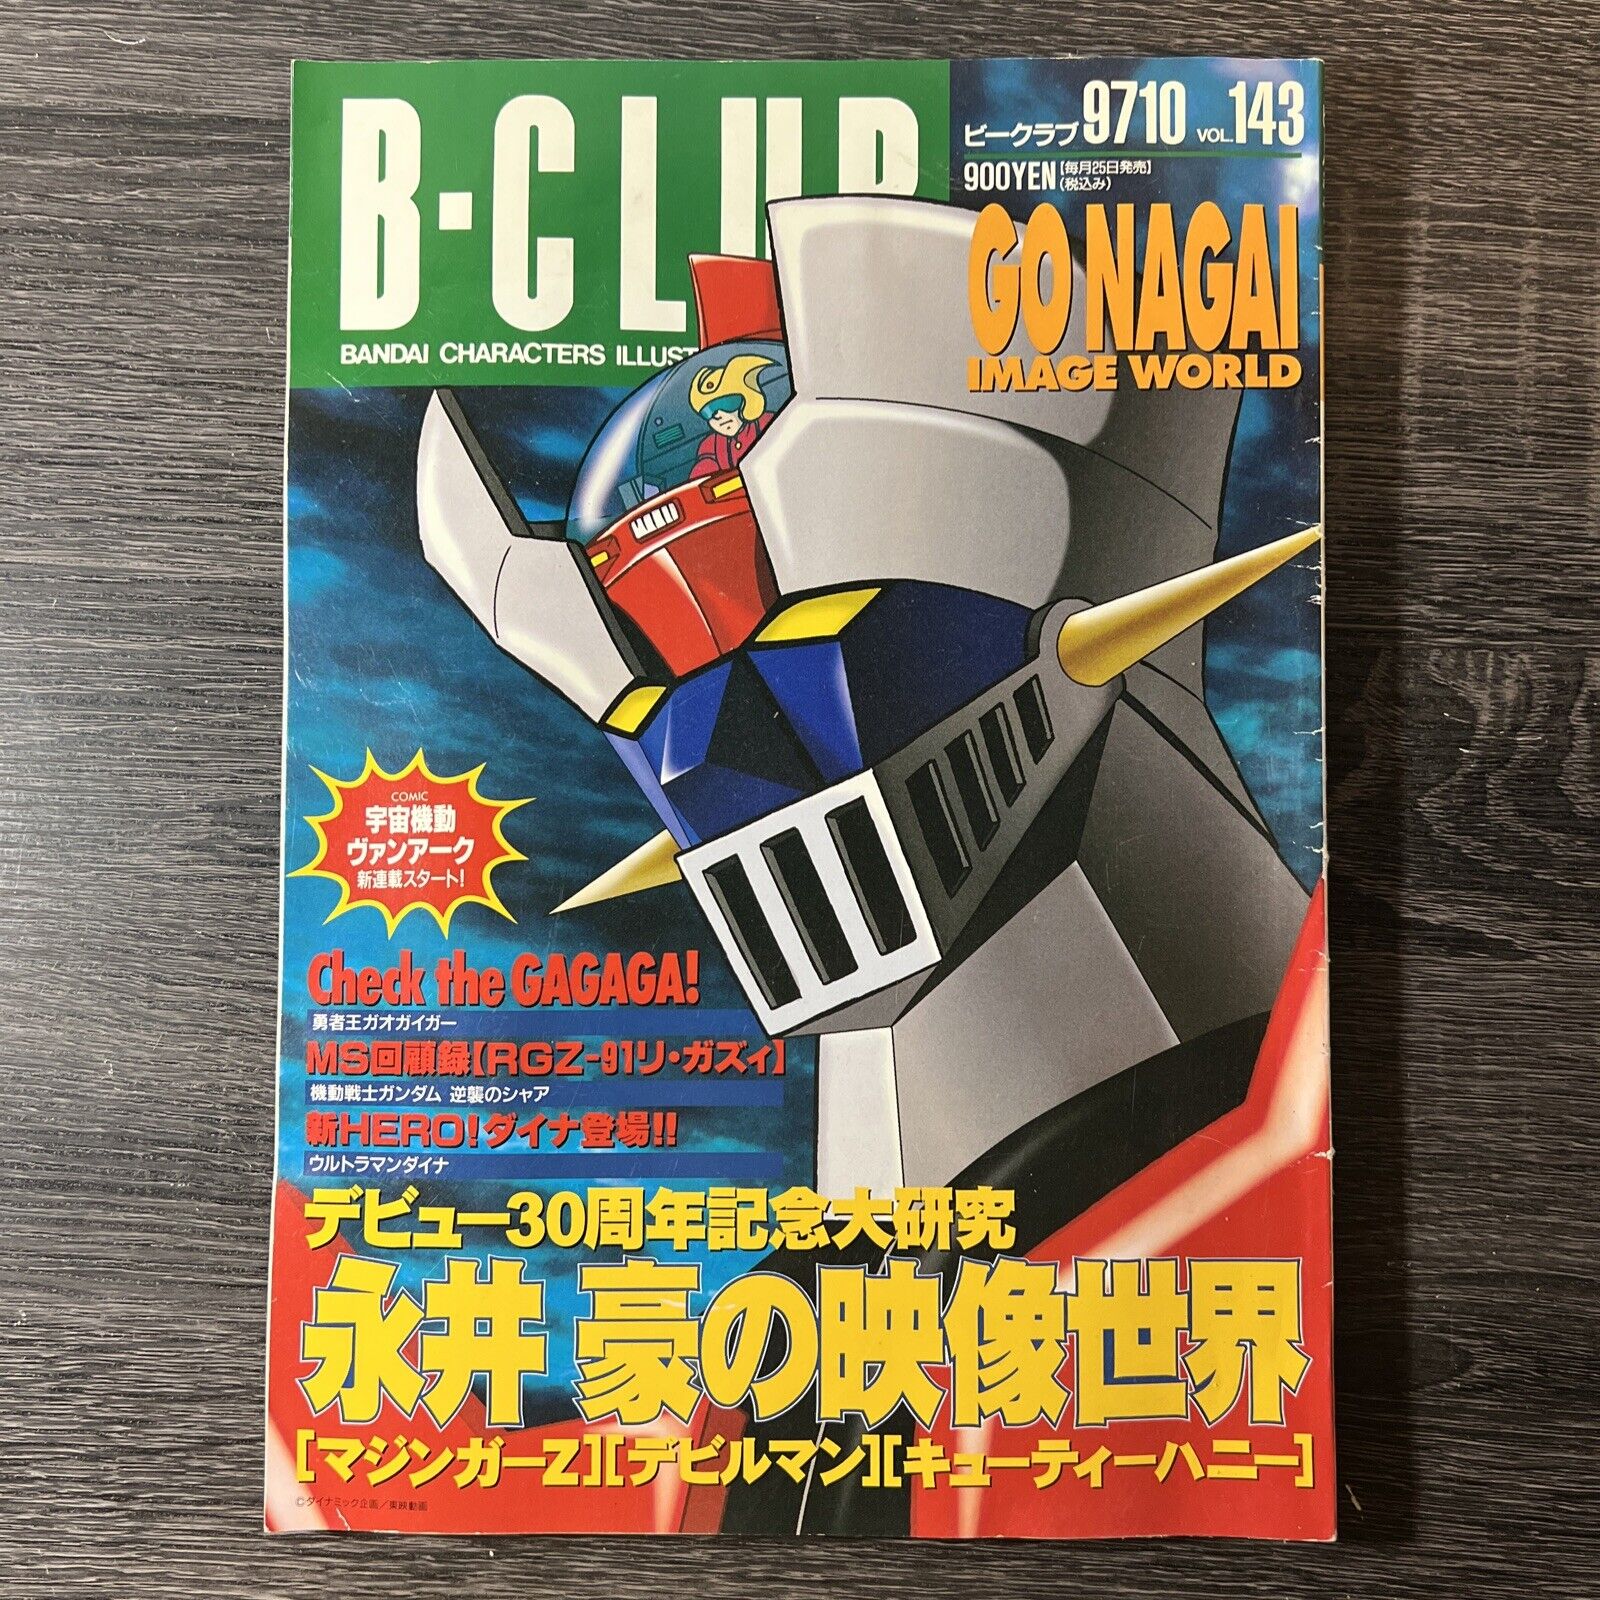 B-Club Issue No. 143 Oct.1997 - Go Nagai Image Worldwide